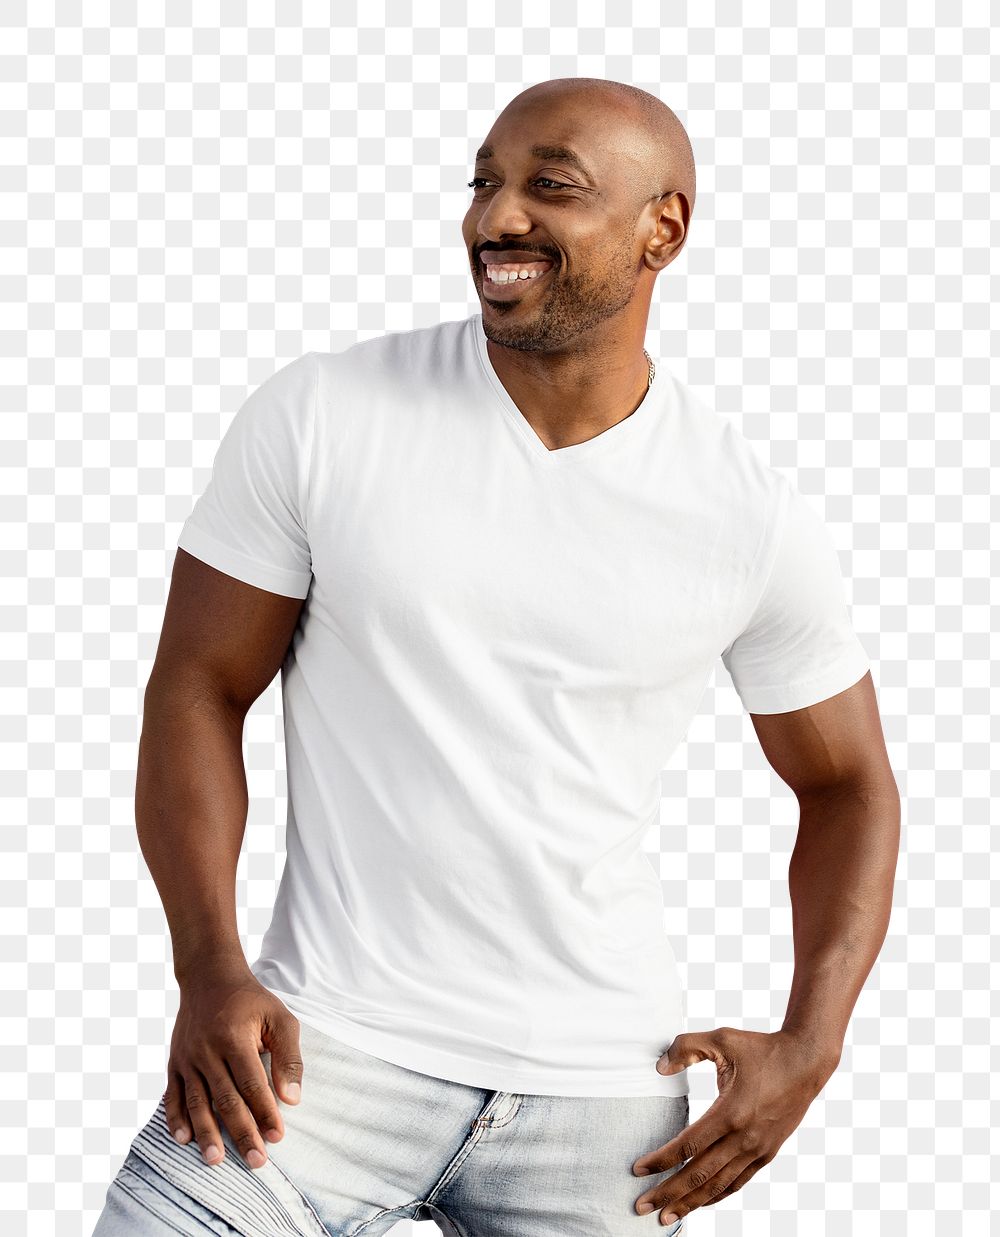 Man png sticker, person cut out, white plain shirt fashion, transparent background